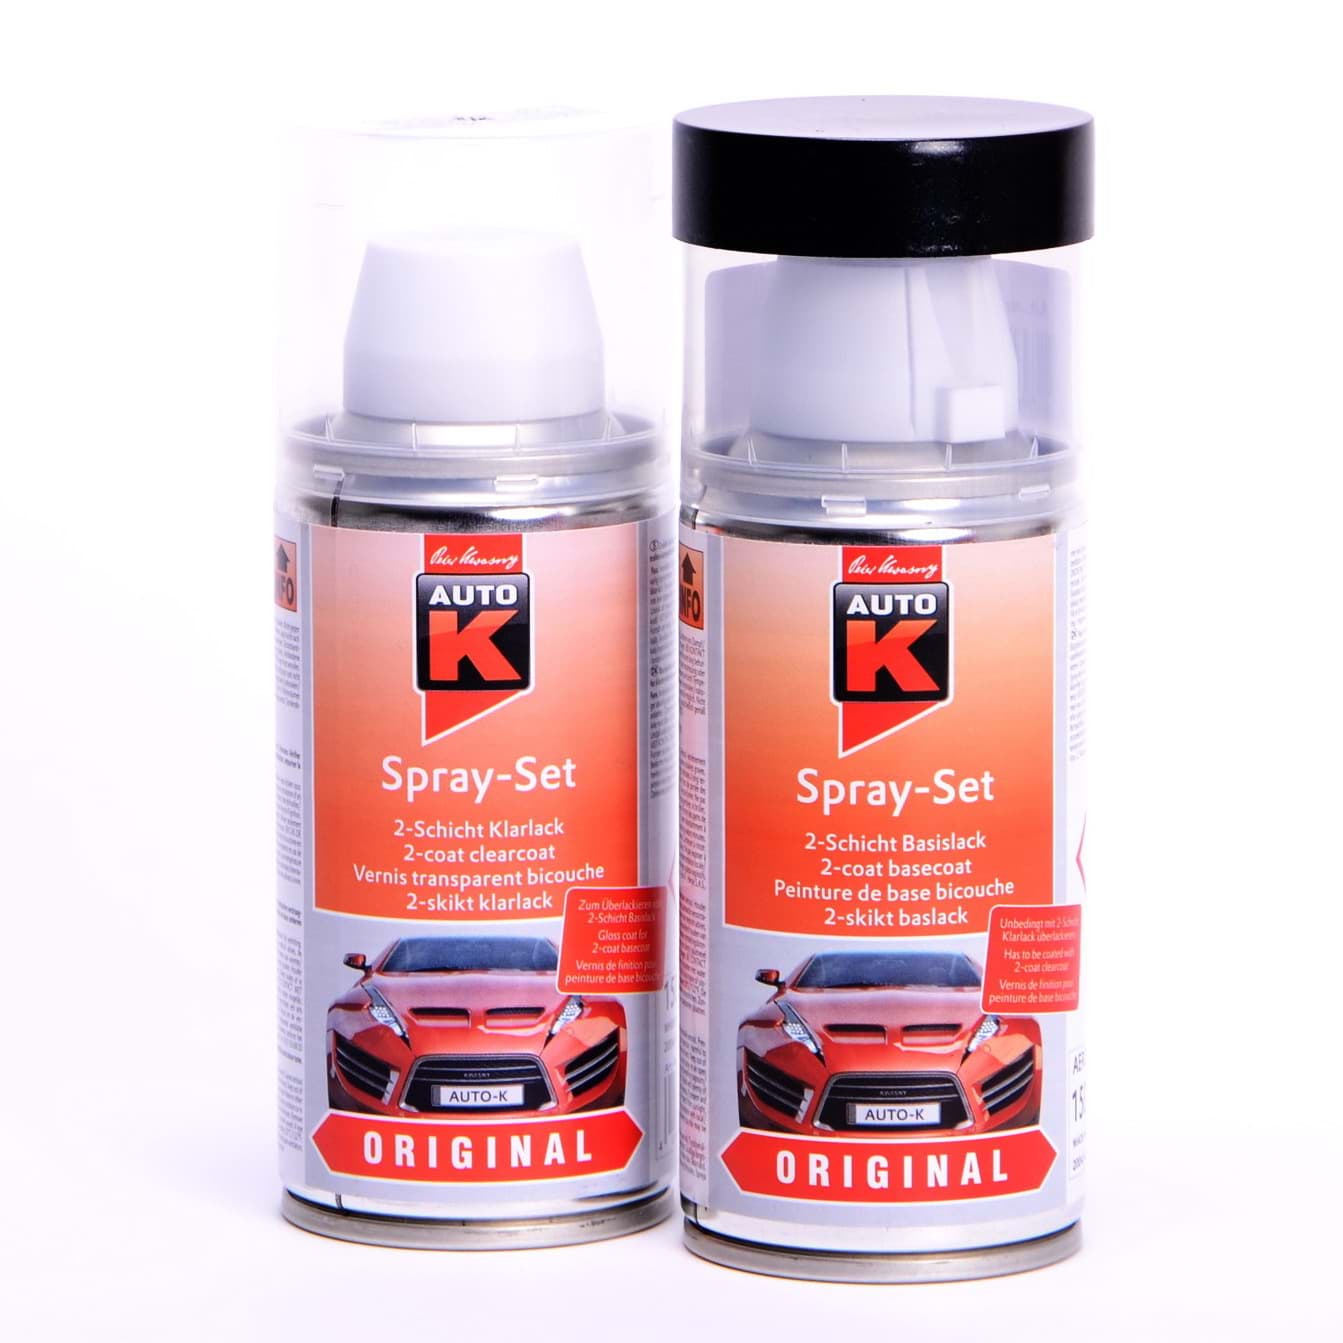 Auto-K Spray-Set Autolack für Opel 272 Miamiblau 21365  resmi